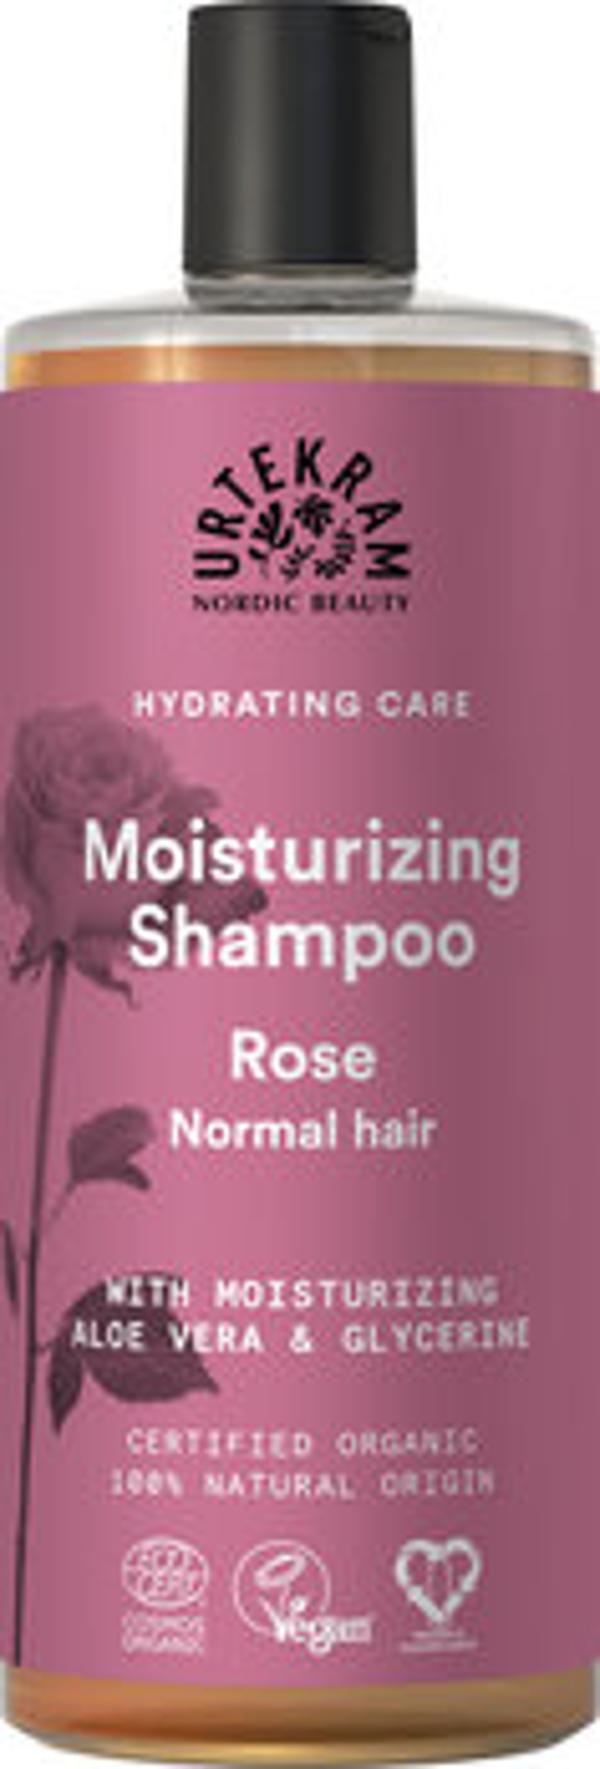 Produktfoto zu Rose Shampoo normales Haar 500ml